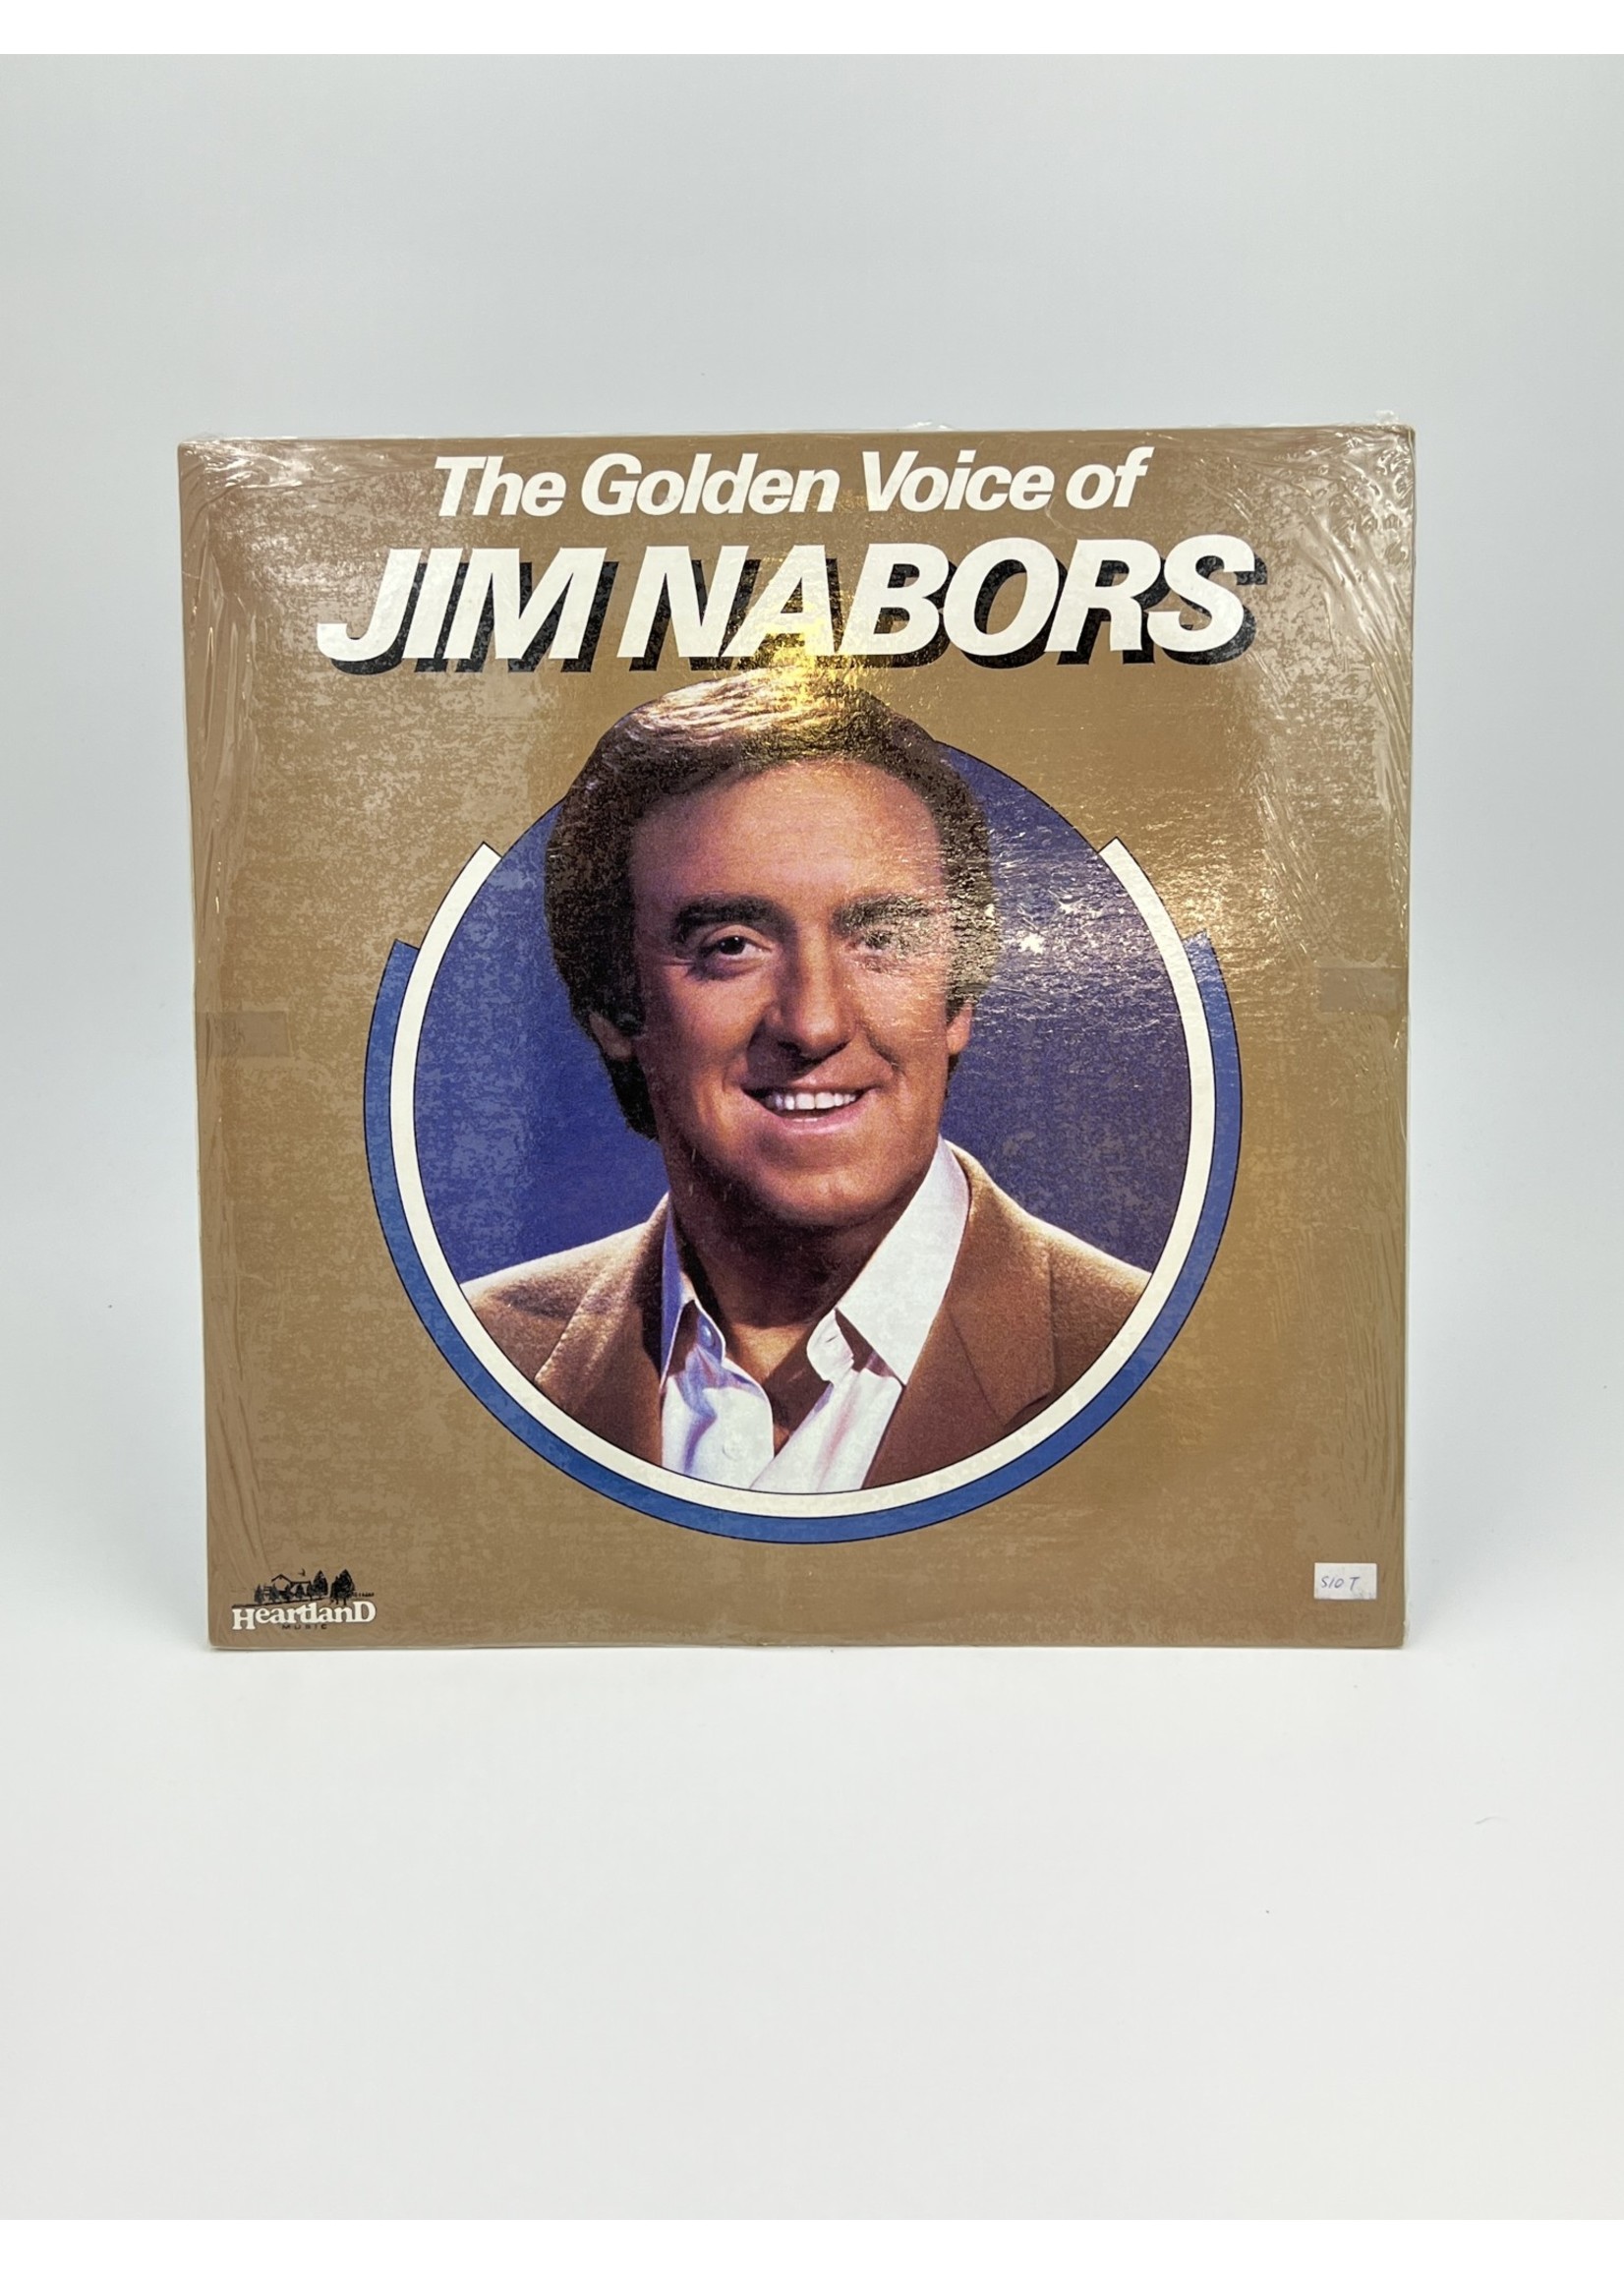 LP Jim Nabors Best Loved Favorites LP Sealed Record